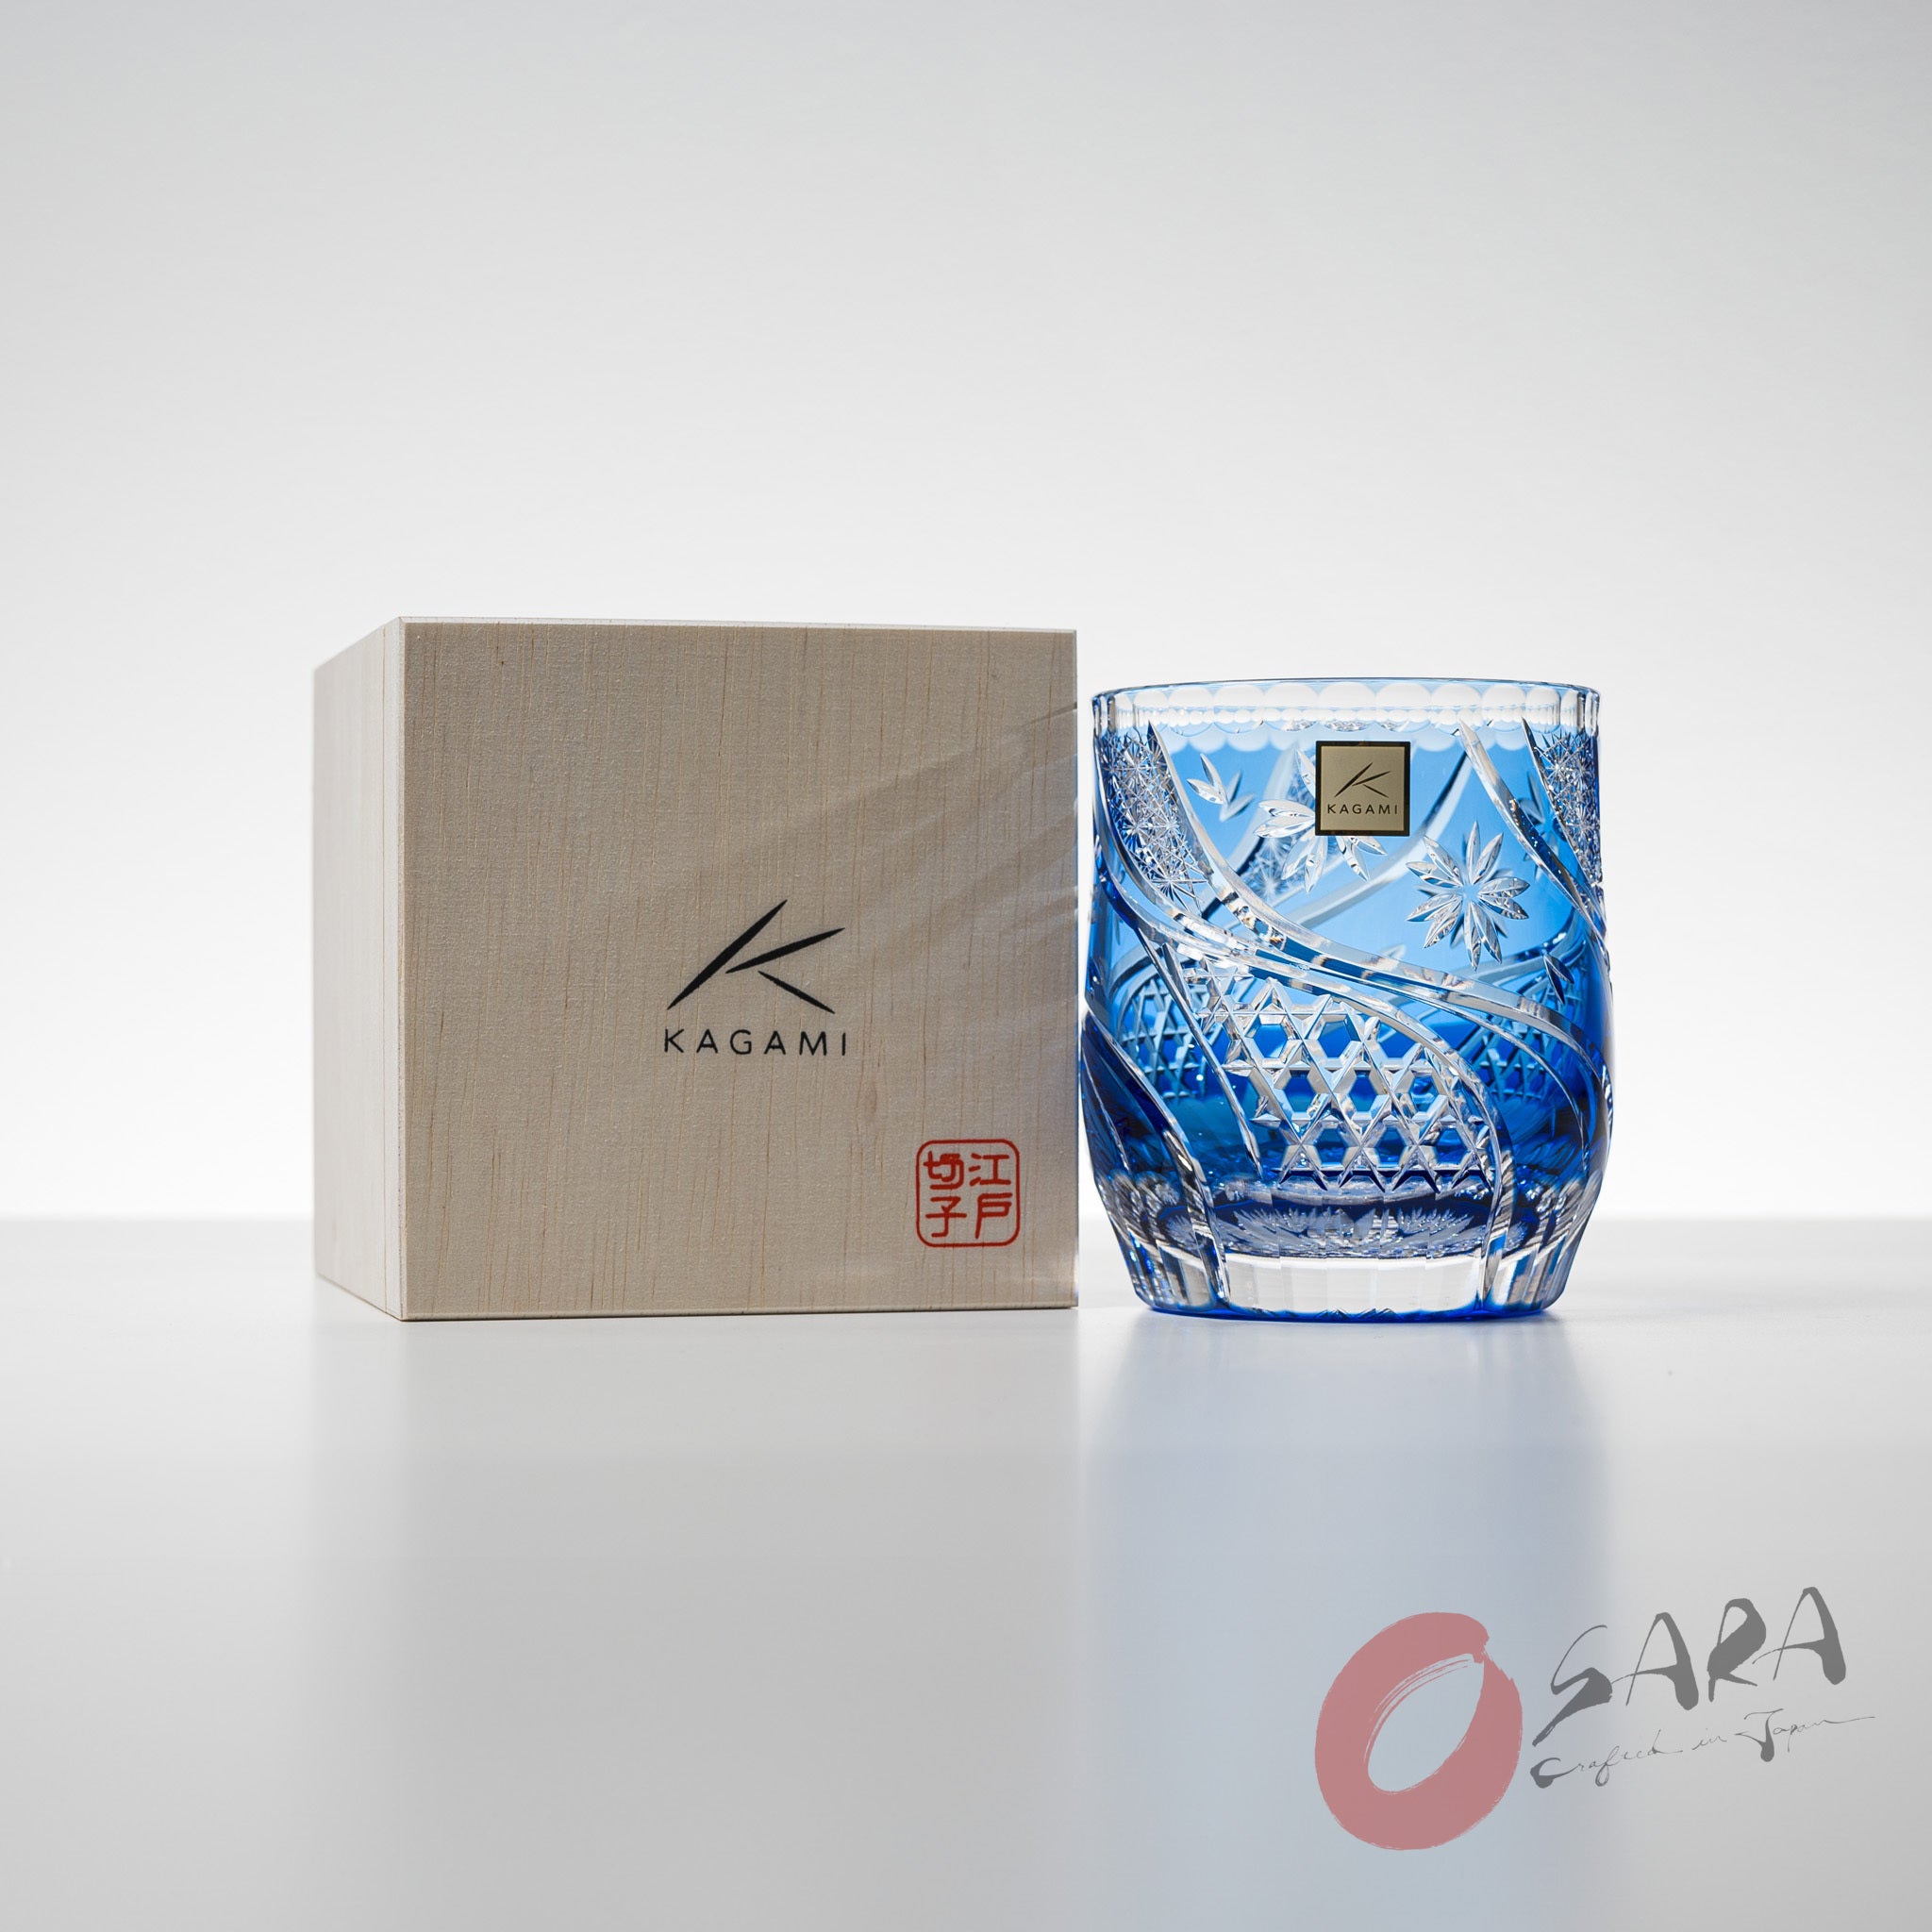 KAGAMI Crystal Edo-Kiriko Rock Glass - Floating Cherry Blossoms - Blue